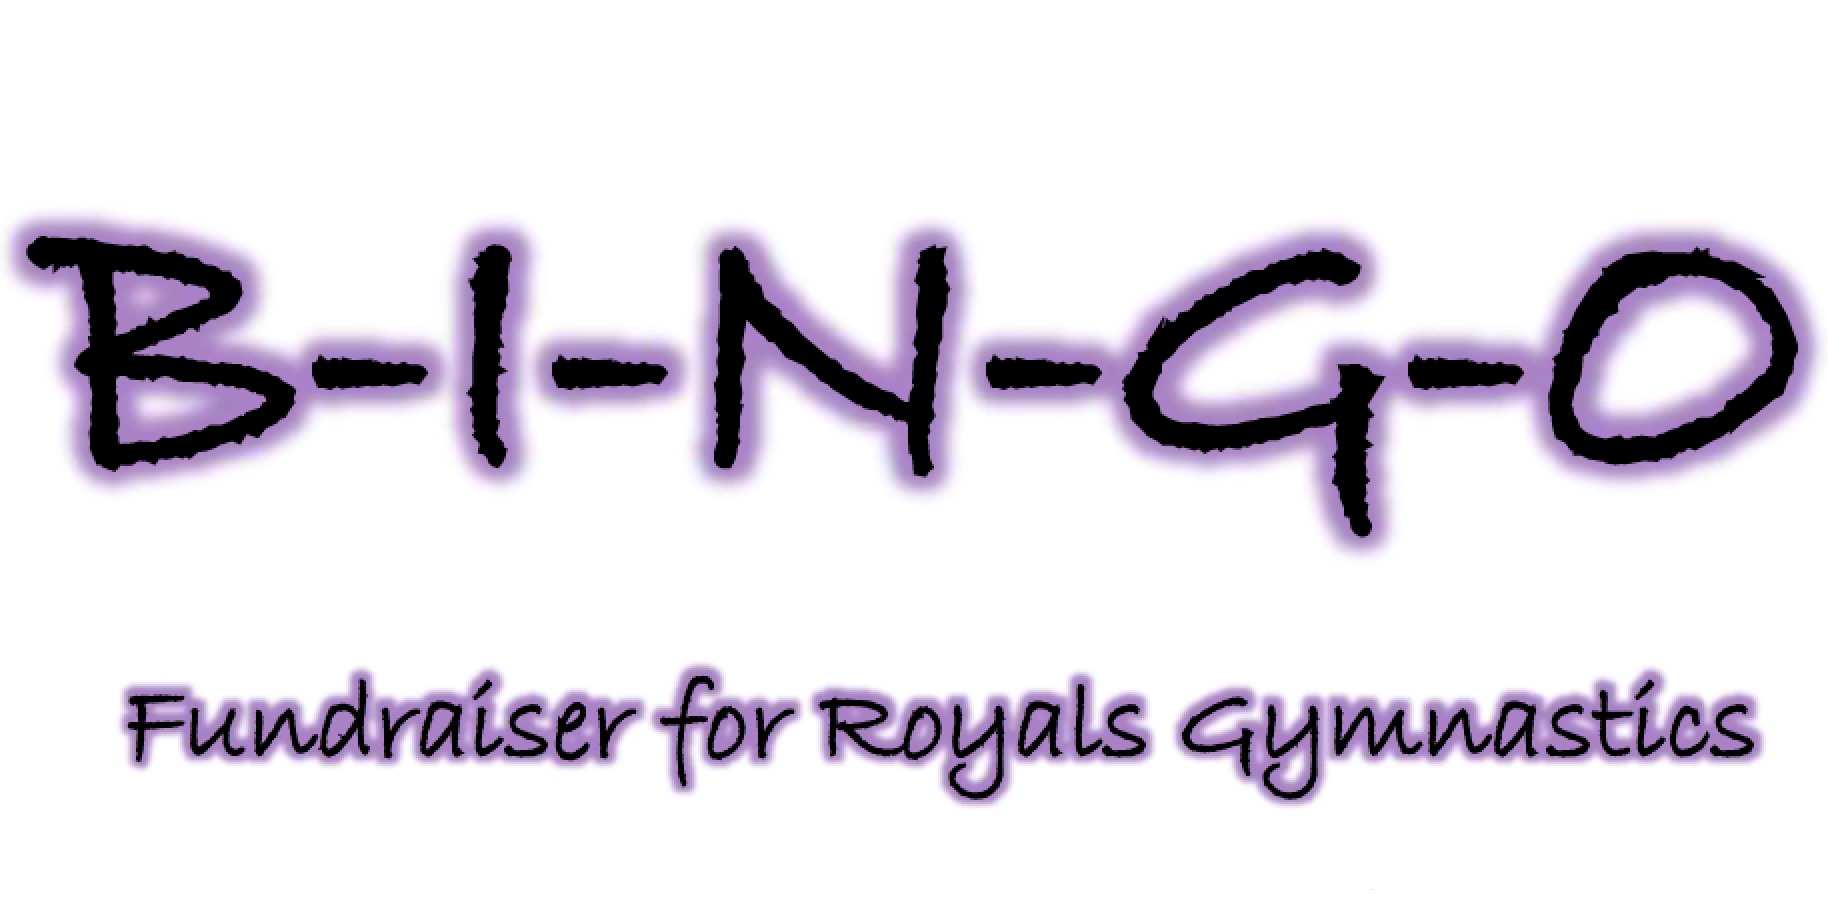 Royals BINGO Fundraiser